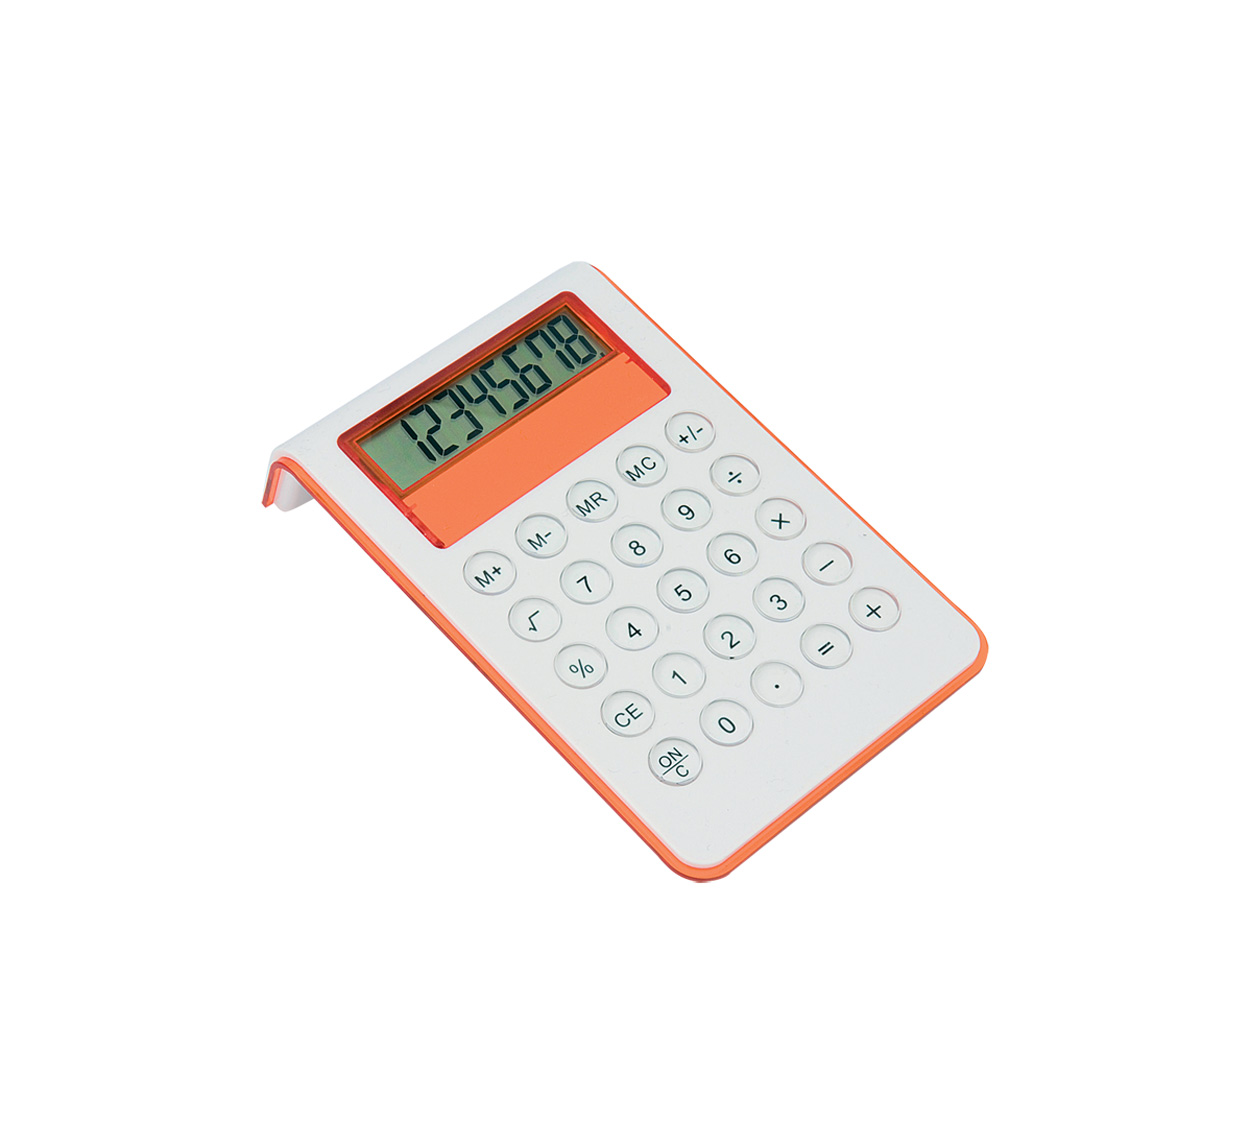 Promo  Myd kalkulator, plave boje